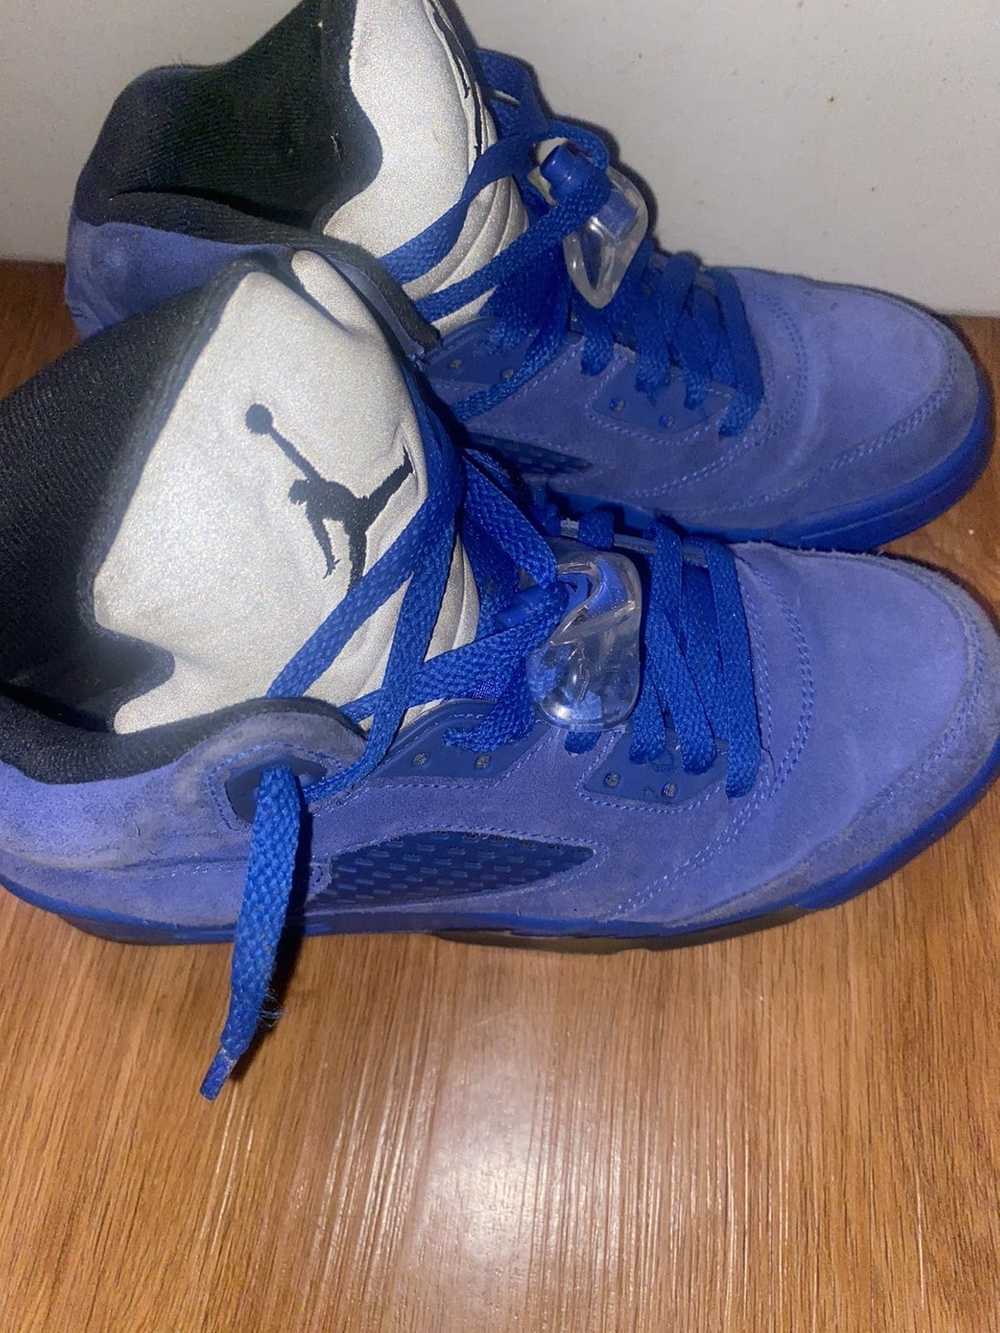 Jordan Brand All Blue Retro Jordan 5s - image 3